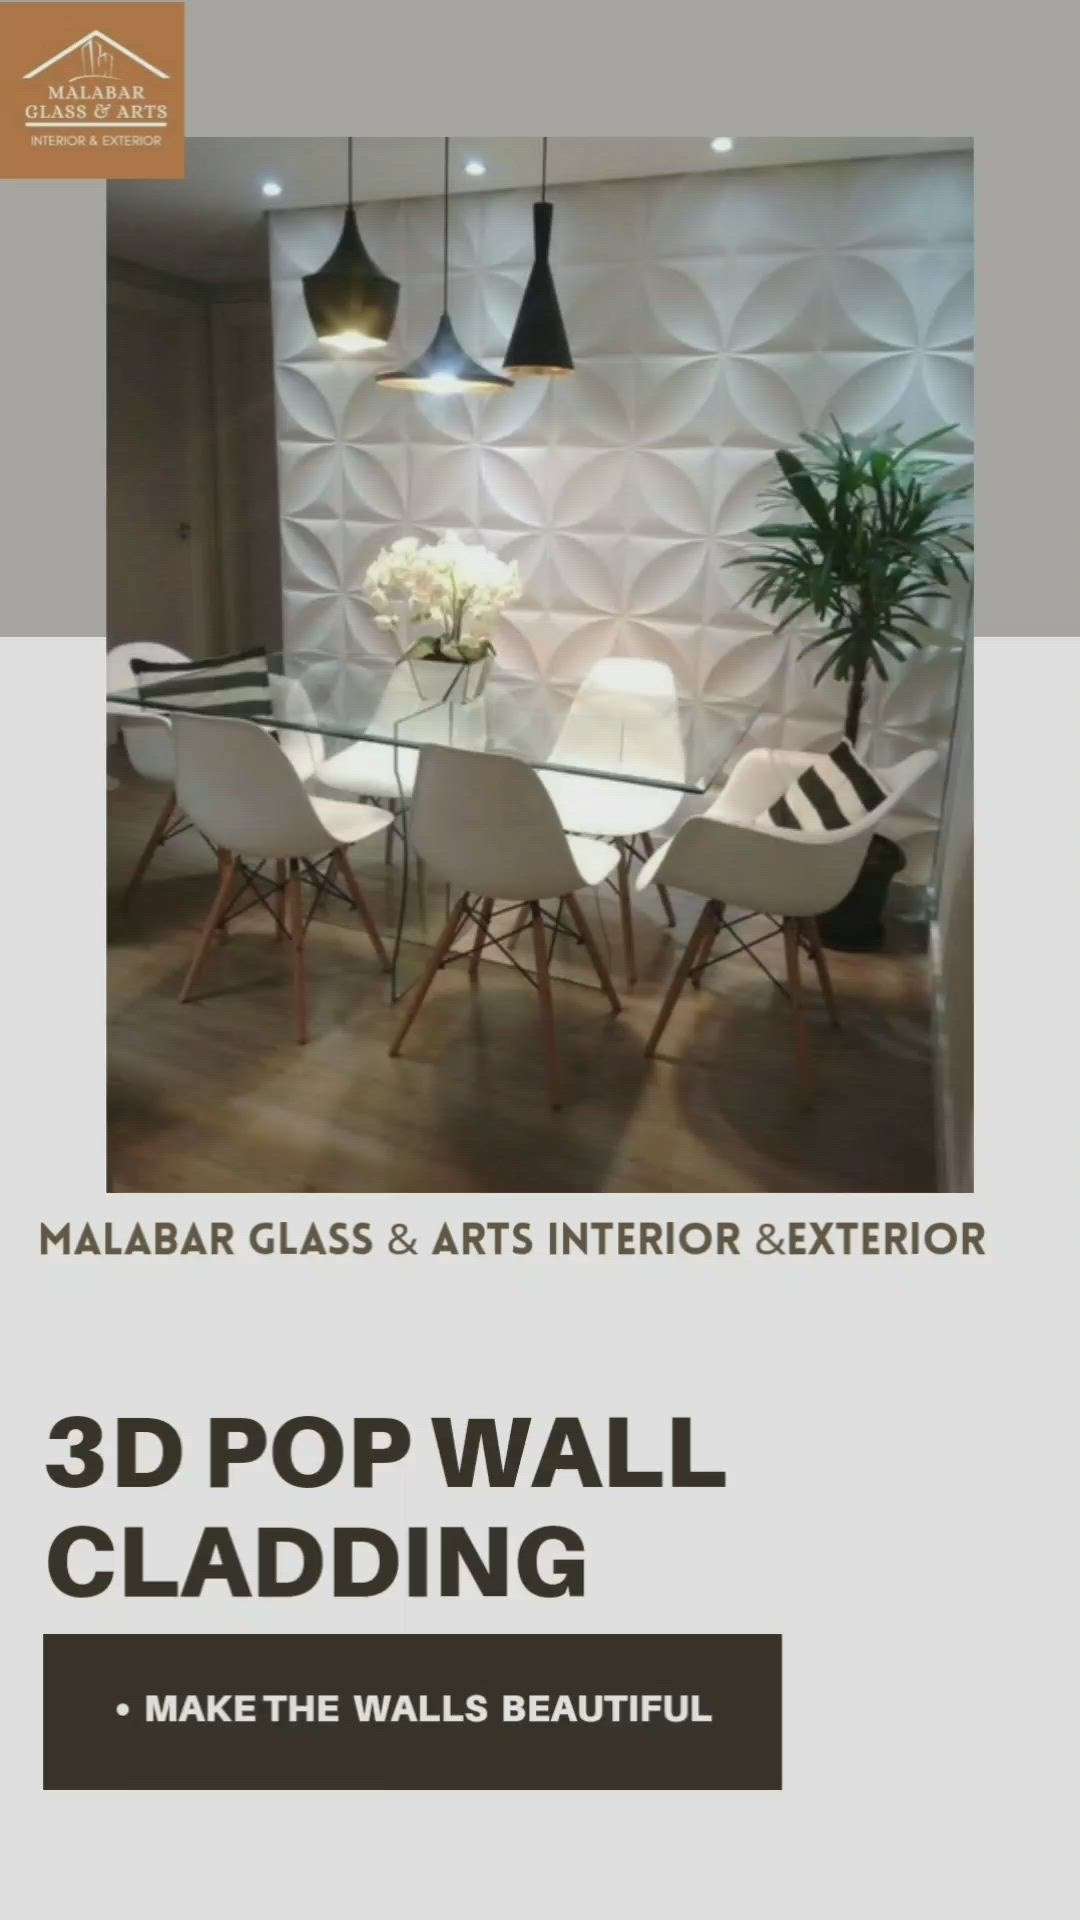 "POP 3D Wall Cladding" നിങ്ങളുടെ വീടിന്റെ ചുമരുകൾക്ക് പുതുജീവൻ നൽകാൻ ഞങ്ങളെ സമീപിക്കു...
MALABAR GLASS & ARTS
     Interior & Exterior
         9995911080